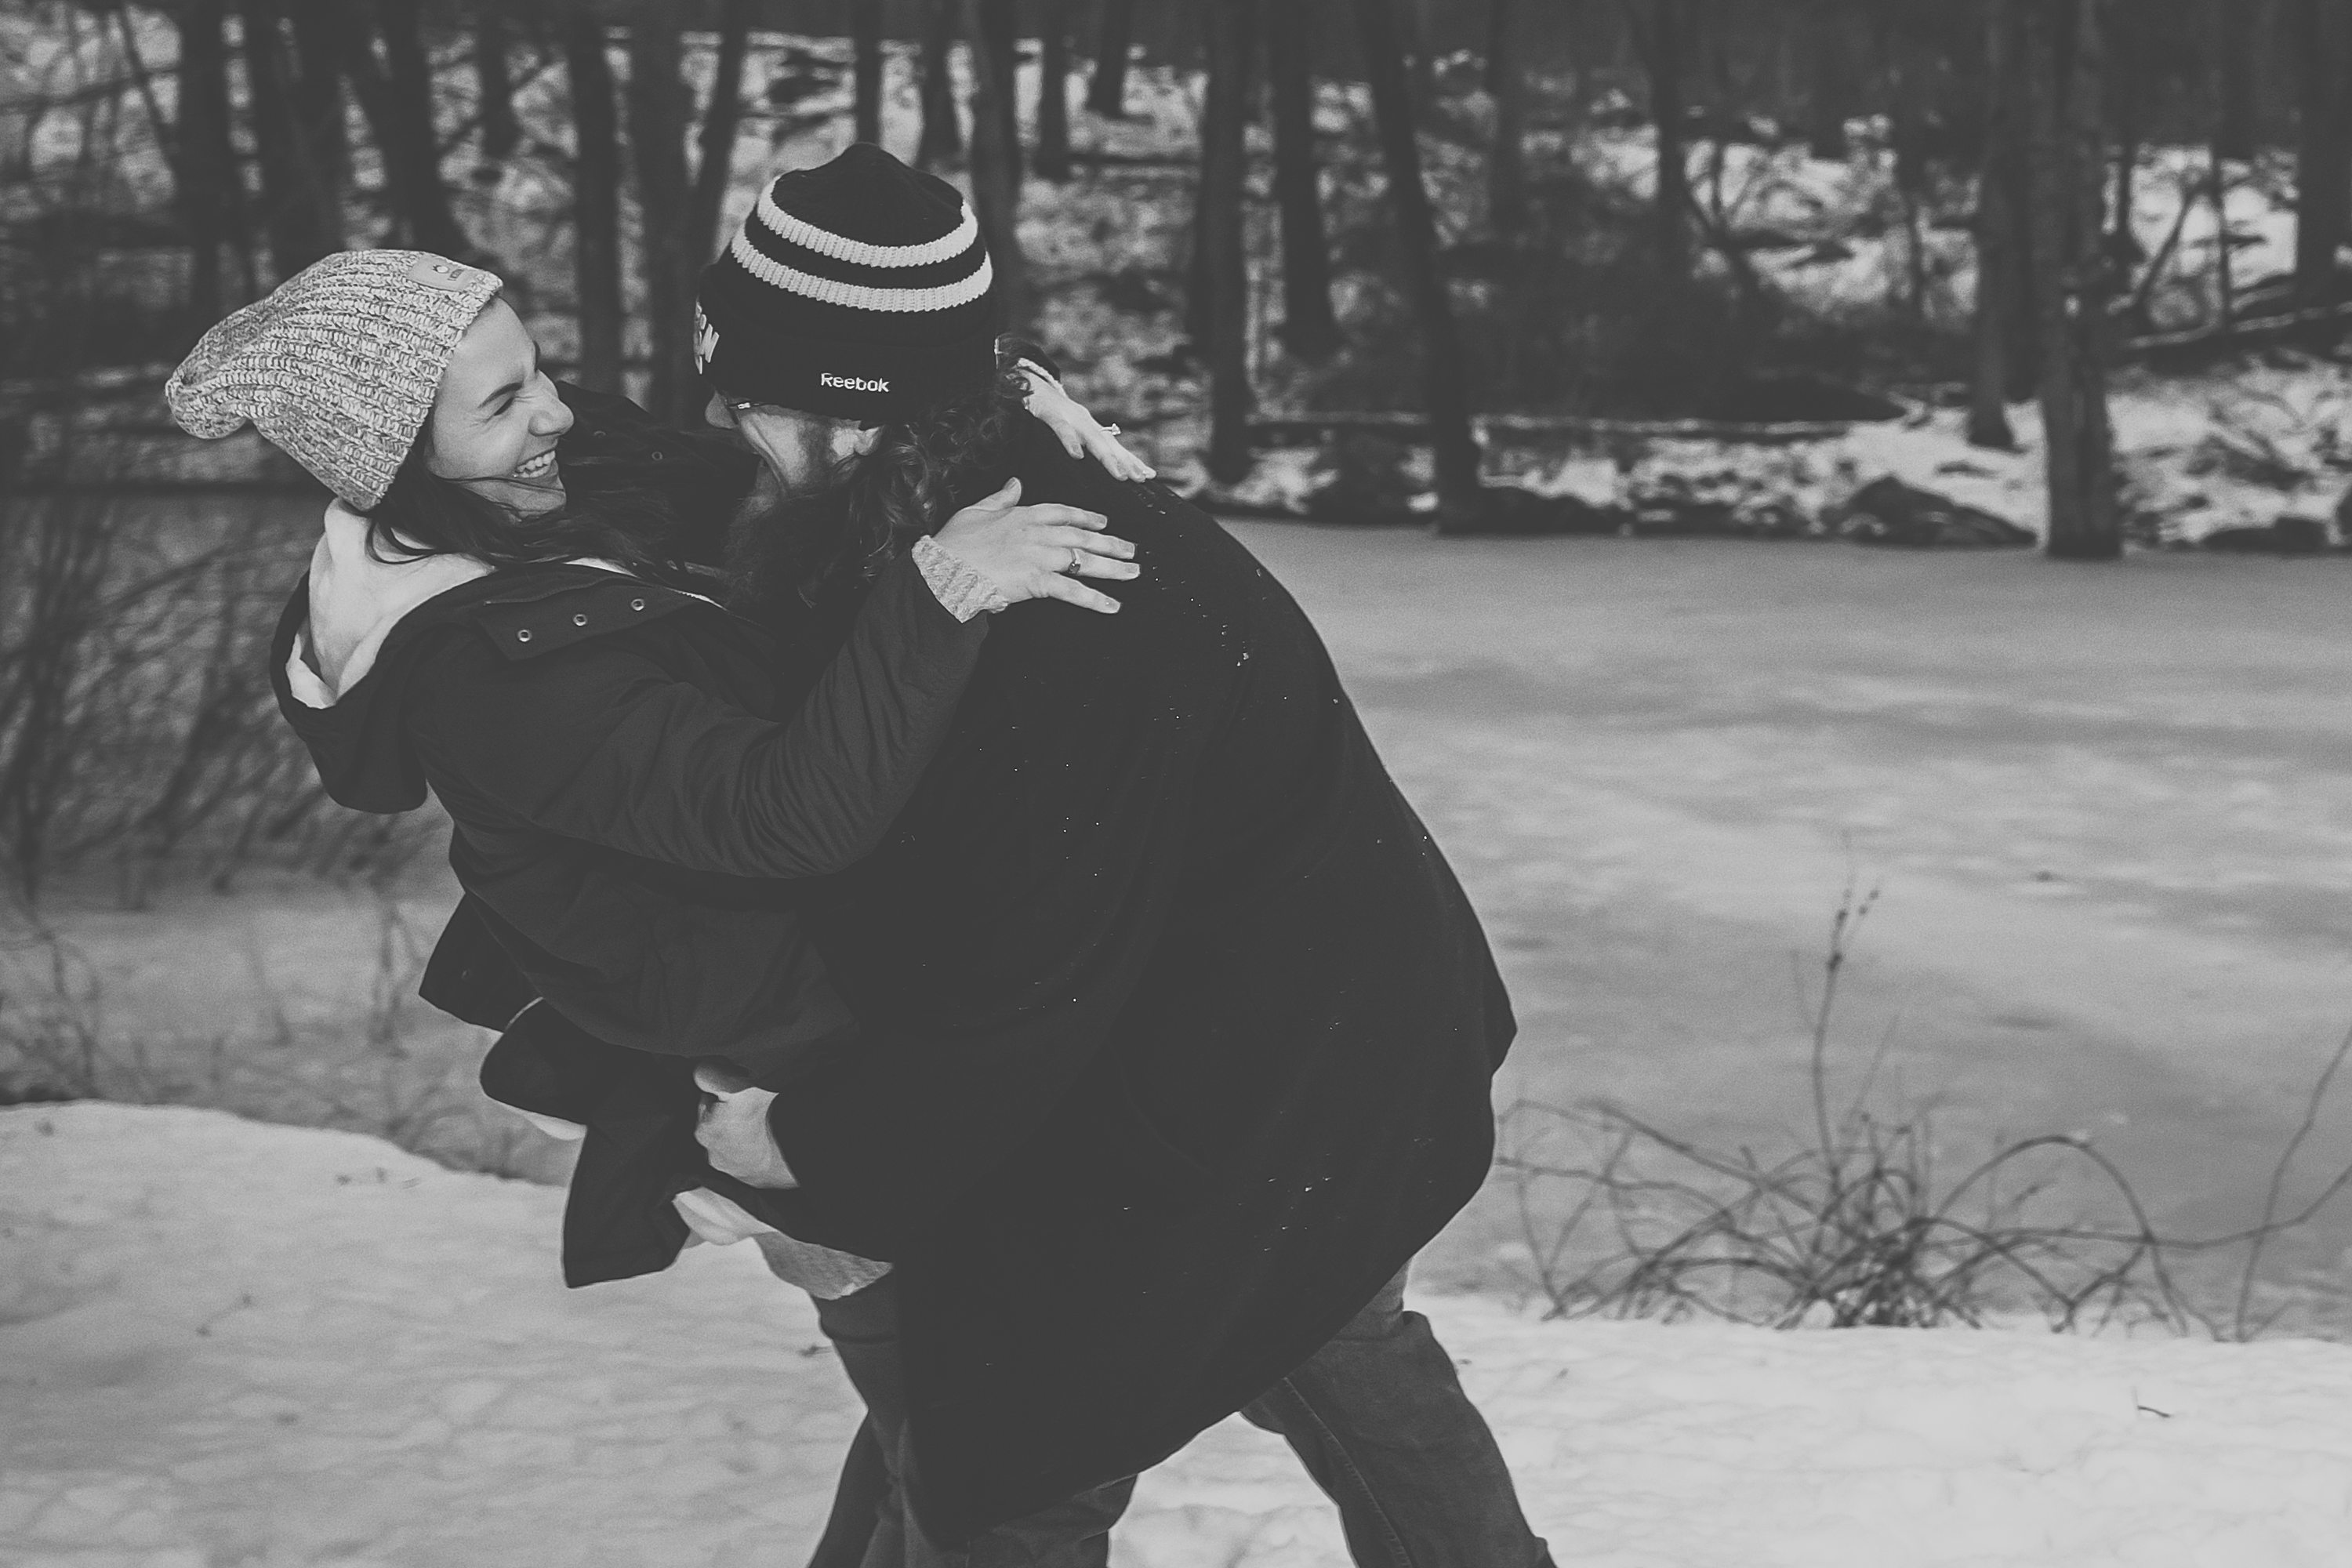 Massachusetts Wedding Photographer,Wrentham Wedding Photographer,Snowball Fight at Engagement Session,Snowy Engagement Session,Winter Engagement Session,South Shore Engagement Photographer,Massachusetts Engagement Photographer